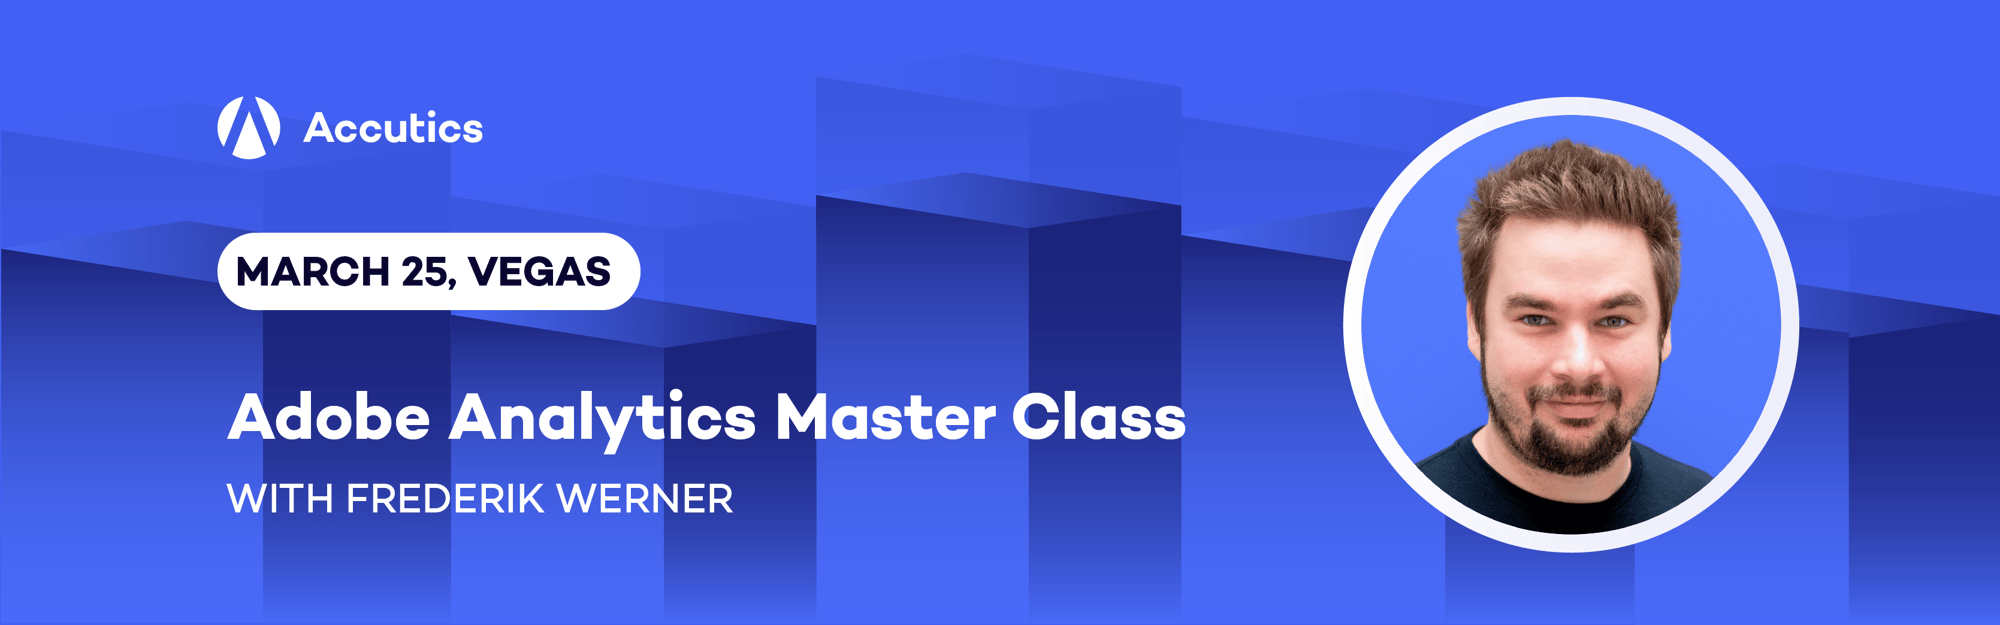 Adobe Master Class.Banner